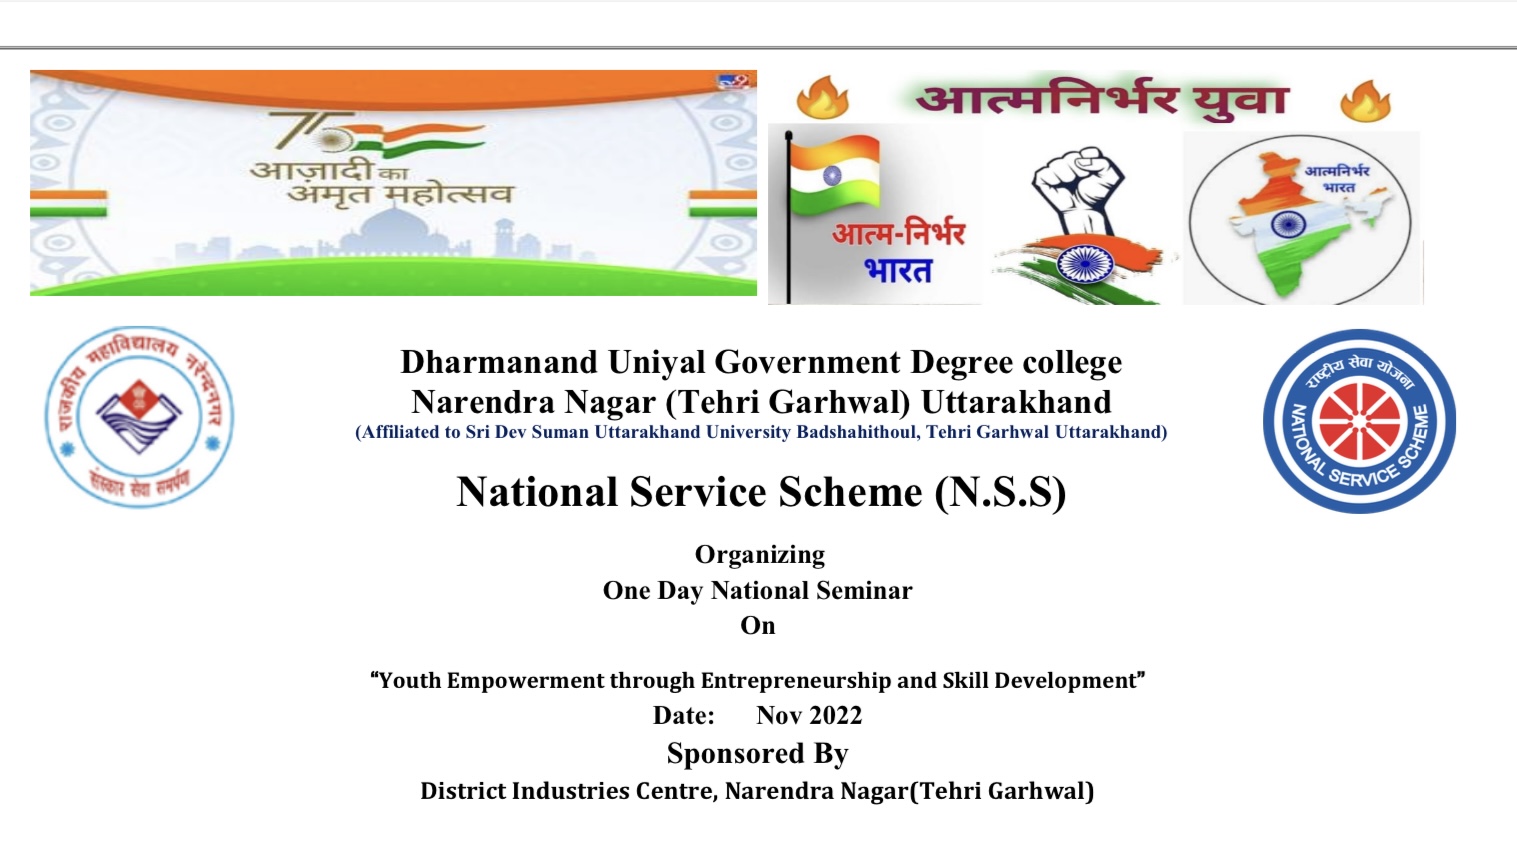 Dharmanand Uniyal Government Degree college Narendra Nagar (Tehri Garhwal) Organizing One Day National Seminar On “Youth Empowerment through Entrepreneurship and Skill Development” Date: Nov 2022